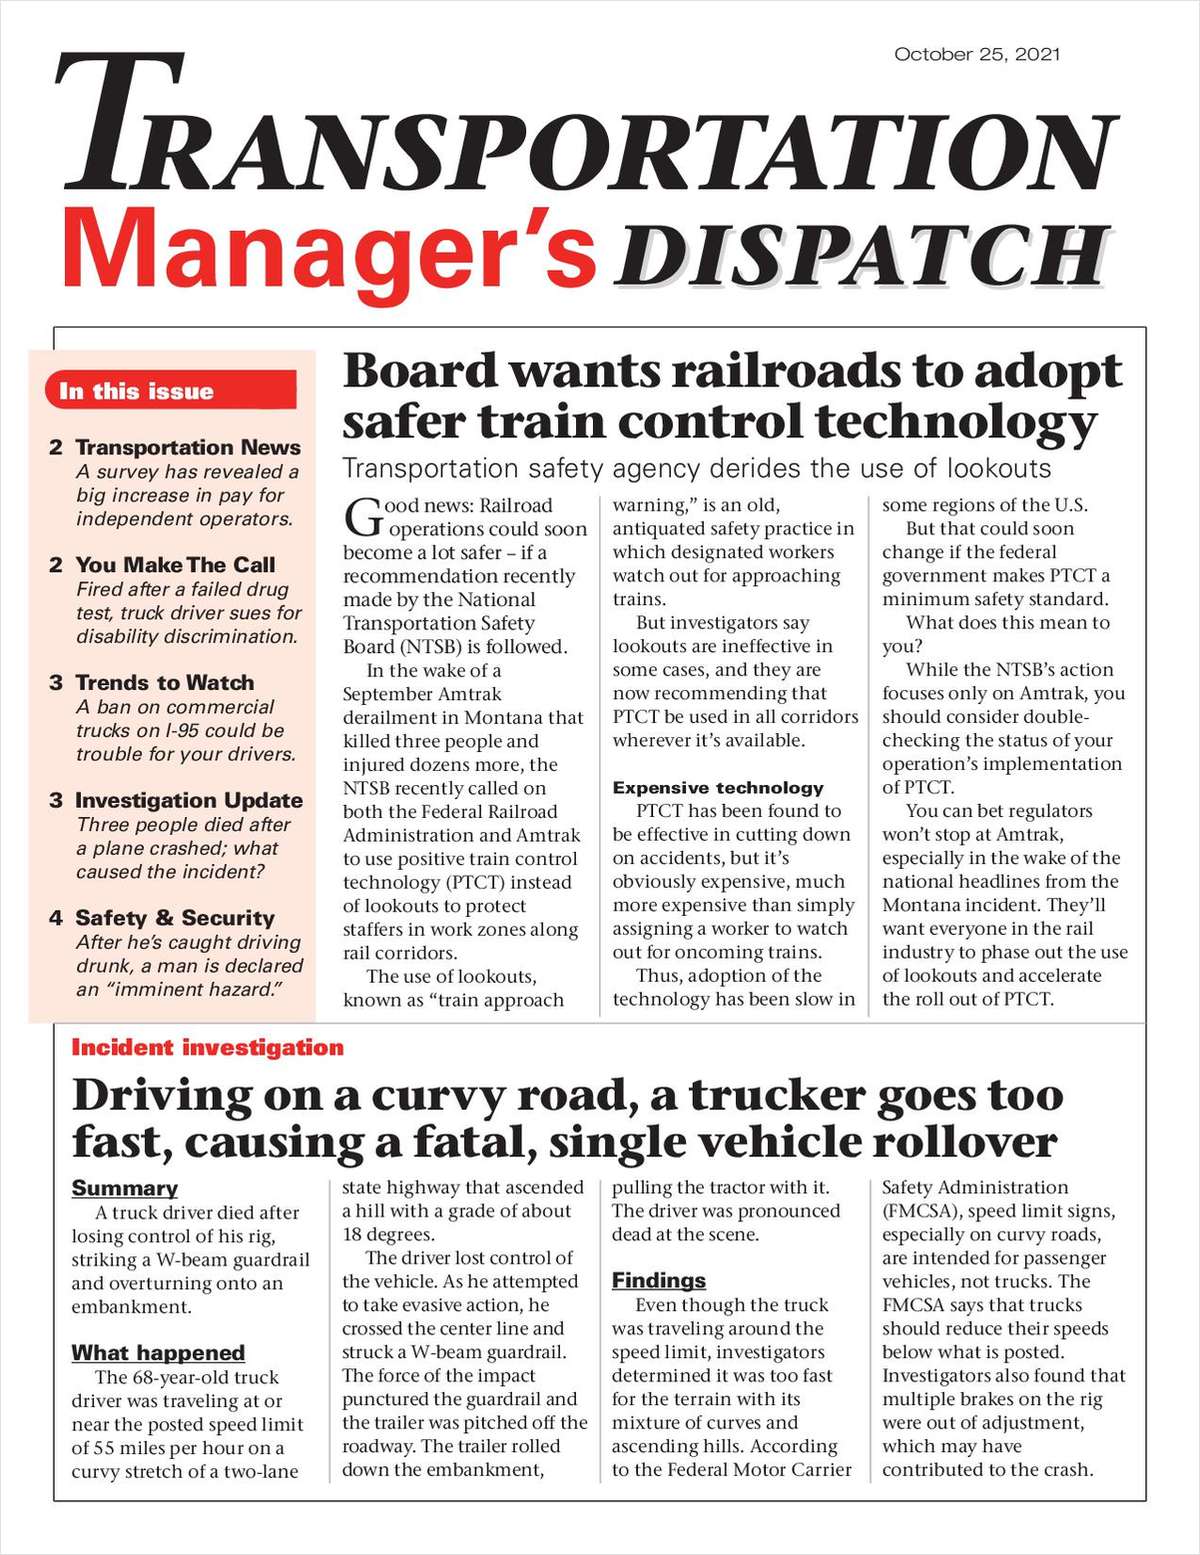 Transportation Manager's Dispatch Newsletter: October 25 Issue